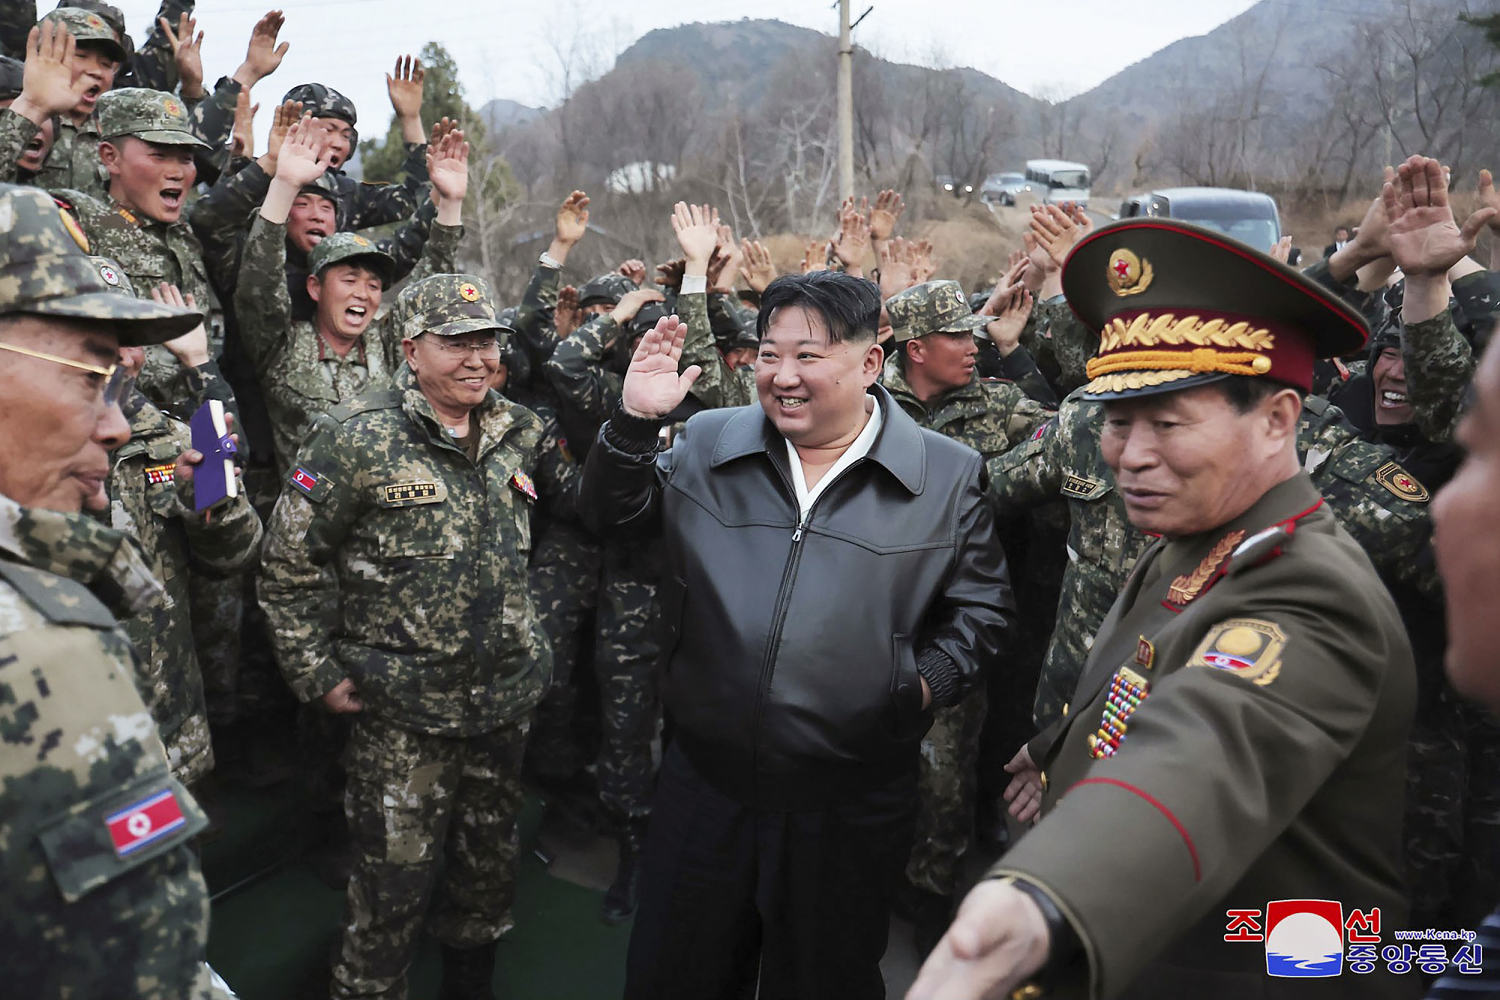 Kim Jong Un visits tank unit and touts war preparations as North Korea says Japan's leader wants a summit